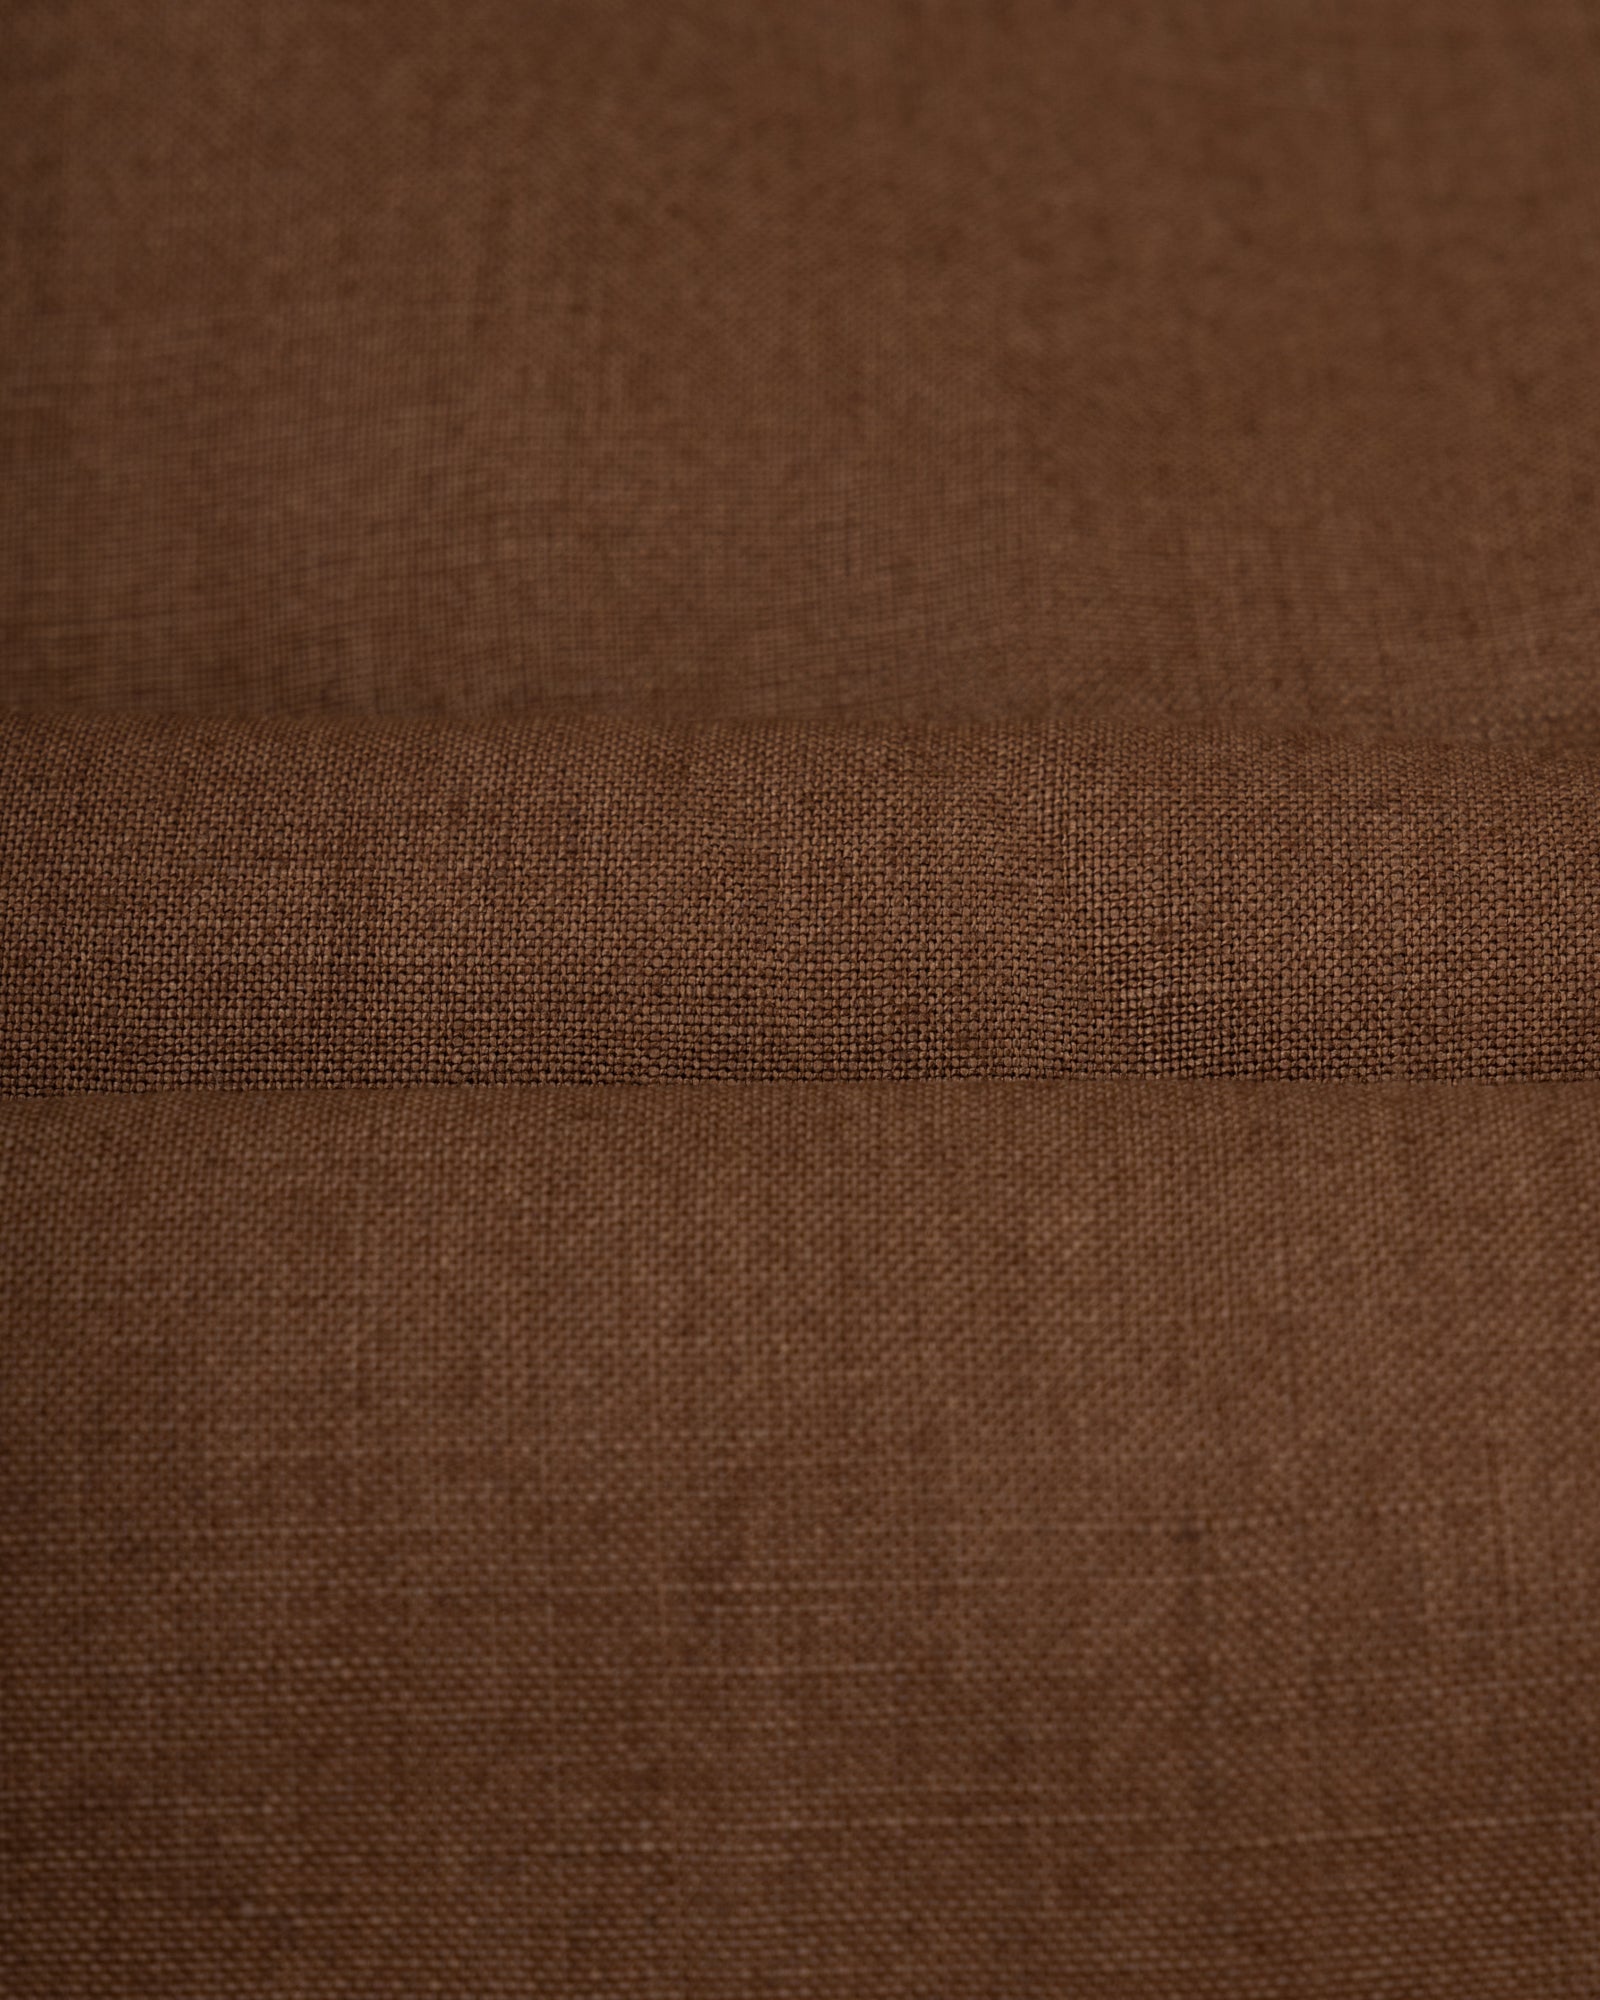 Single Pleat Trouser - Tobacco Brown Linen